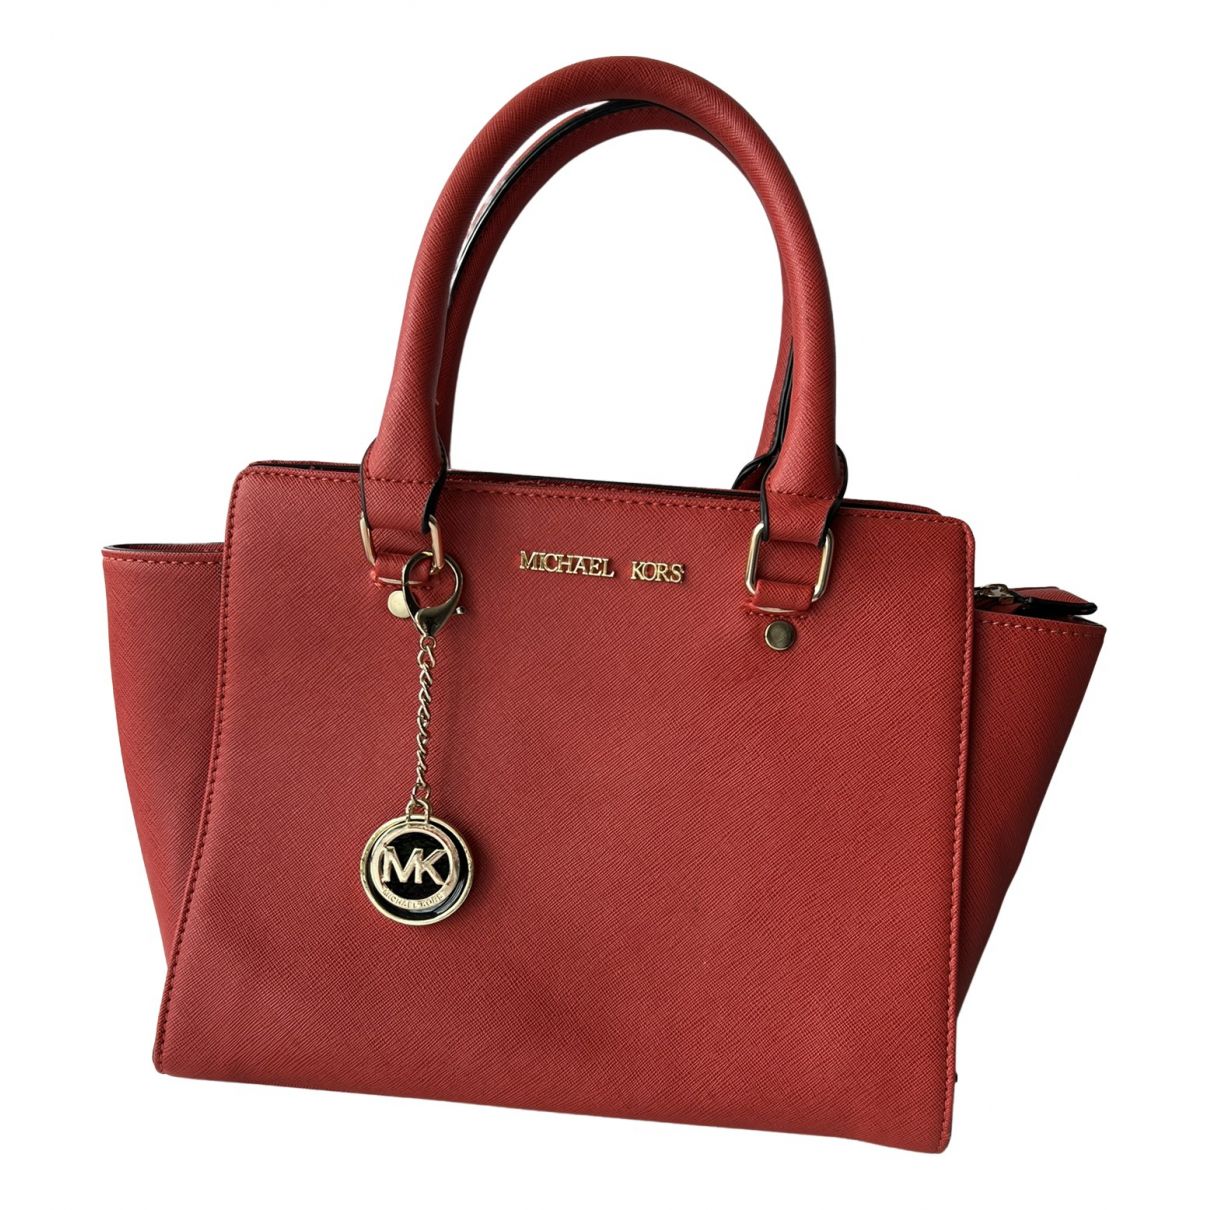 Michael Kors Handbag | Buy or Sell your MK bags - Vestiaire Collective